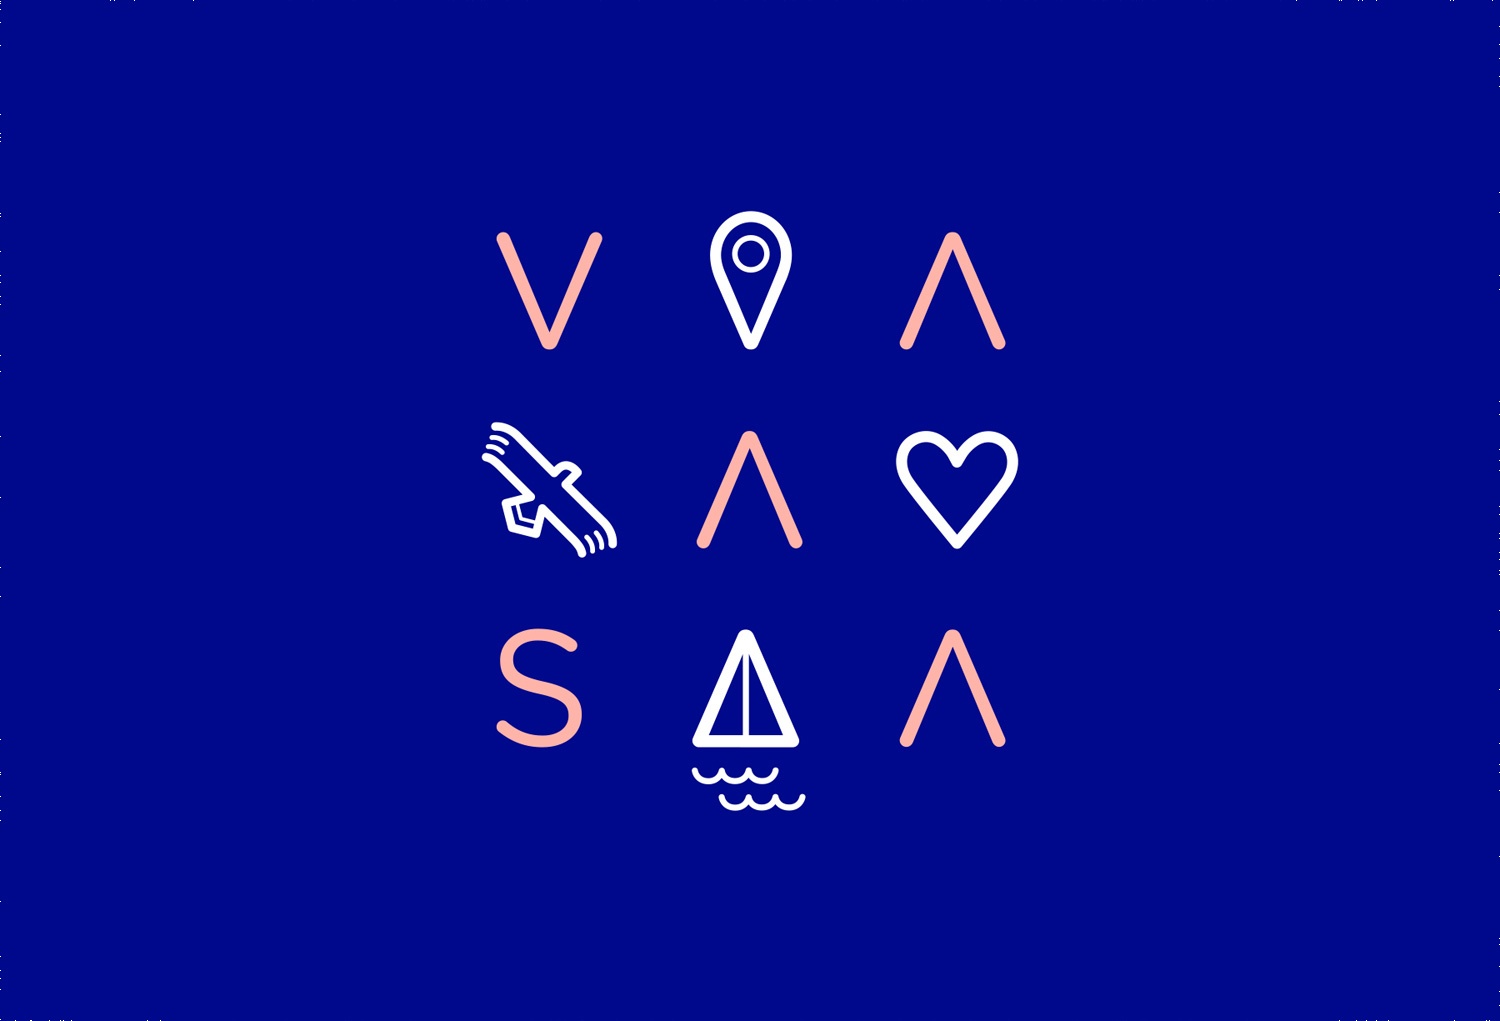 Vaasa Logo